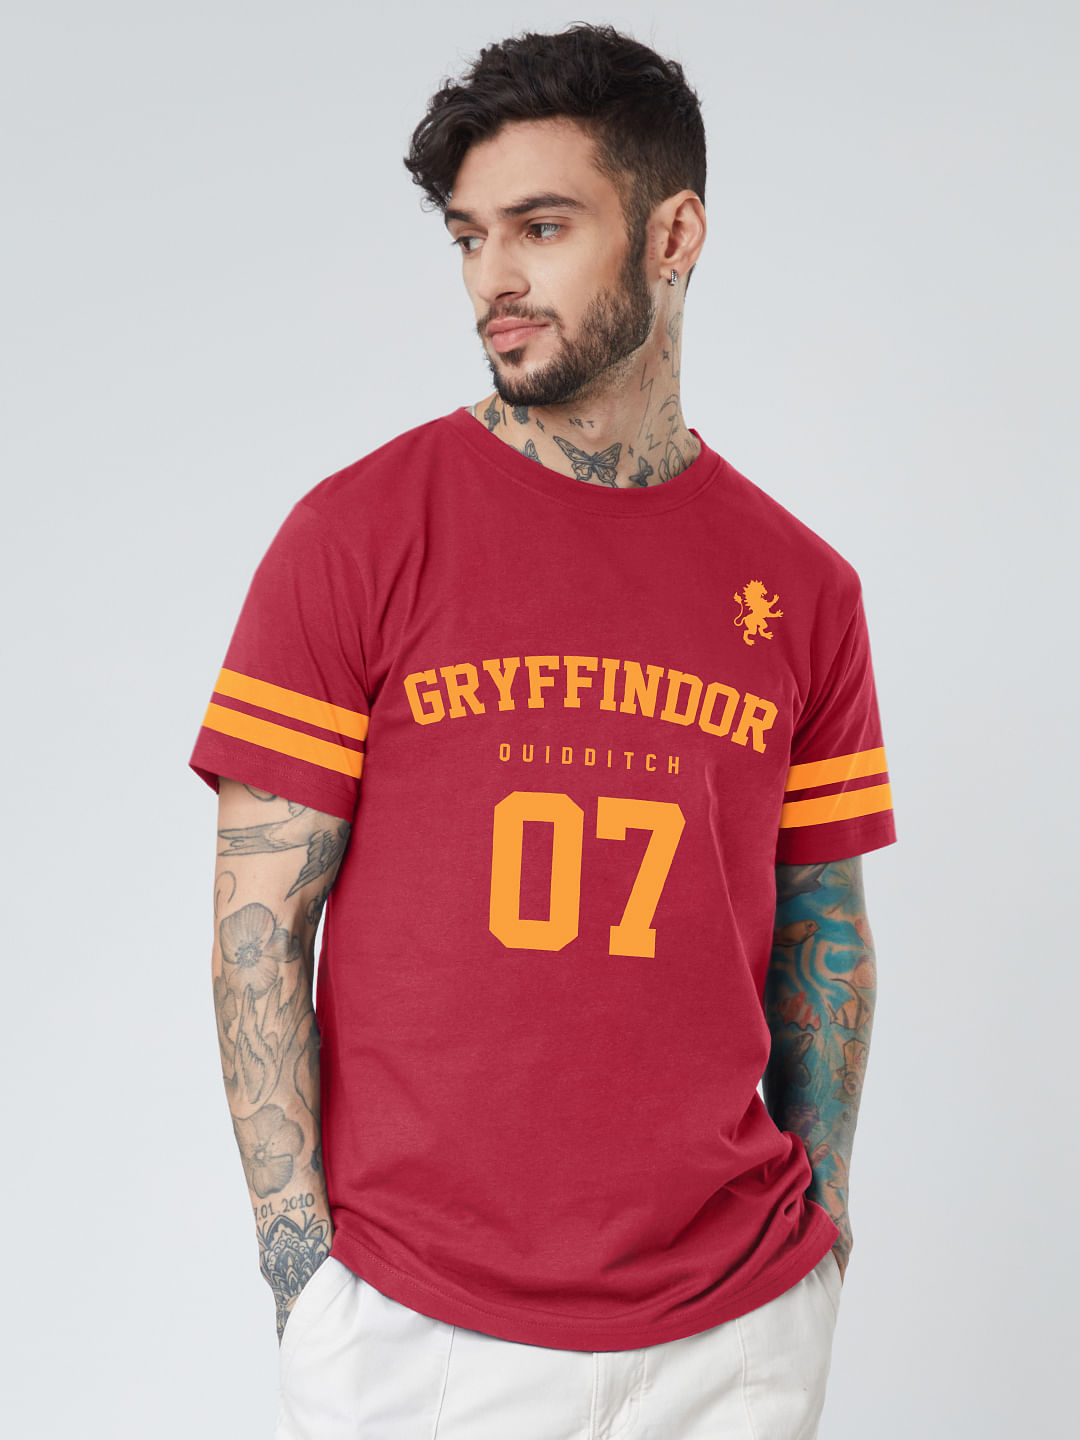 Buy Official Harry Potter Quidditch Uniform 07 Gryffindor T Shirt Online